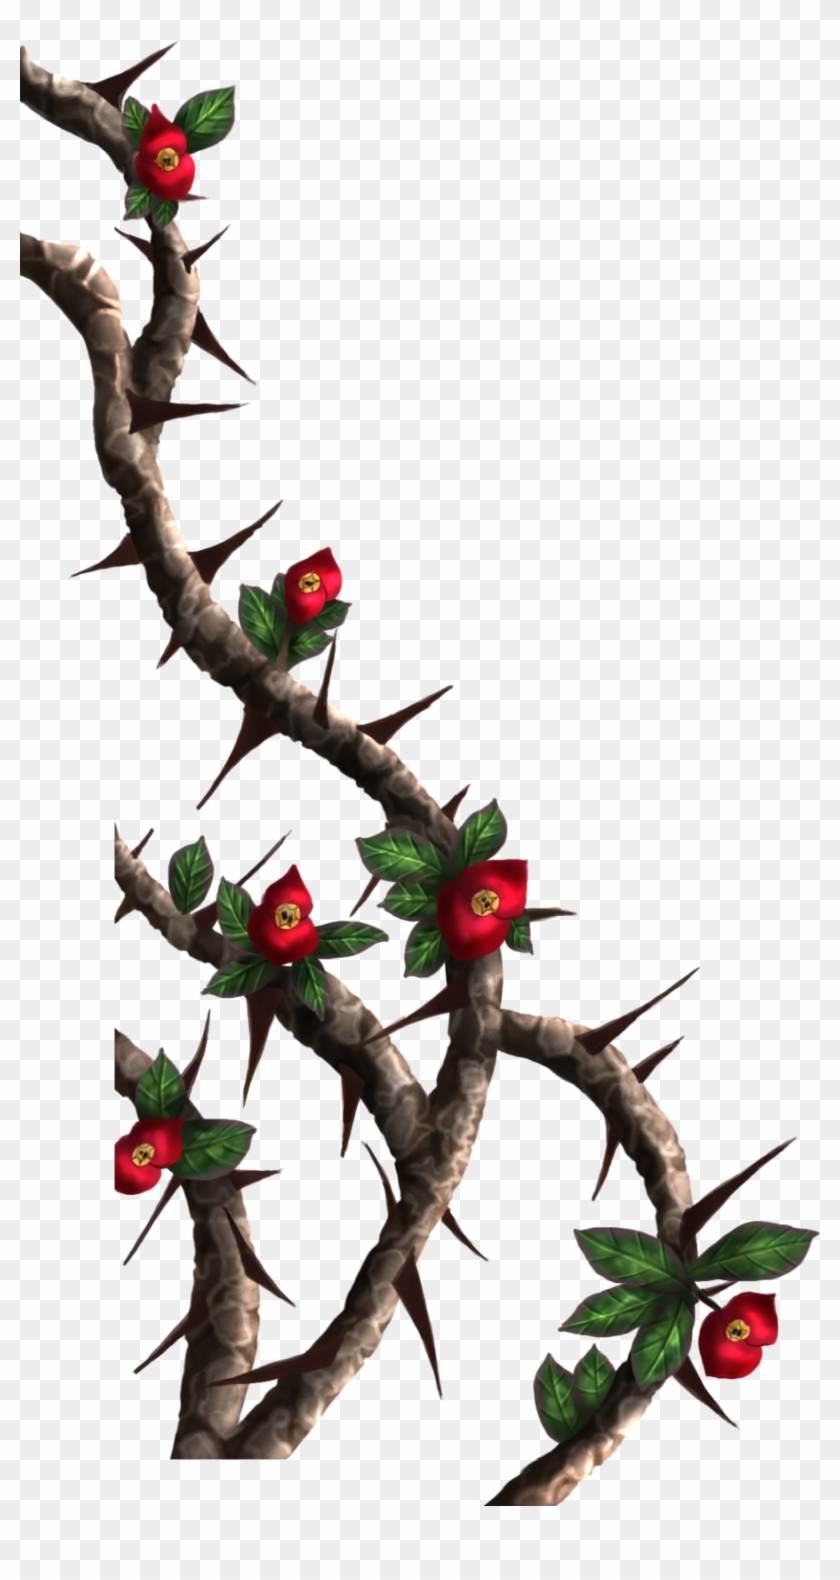 Drawn Rose Bush Thorn Bush - Roses With Thorns Png #299280